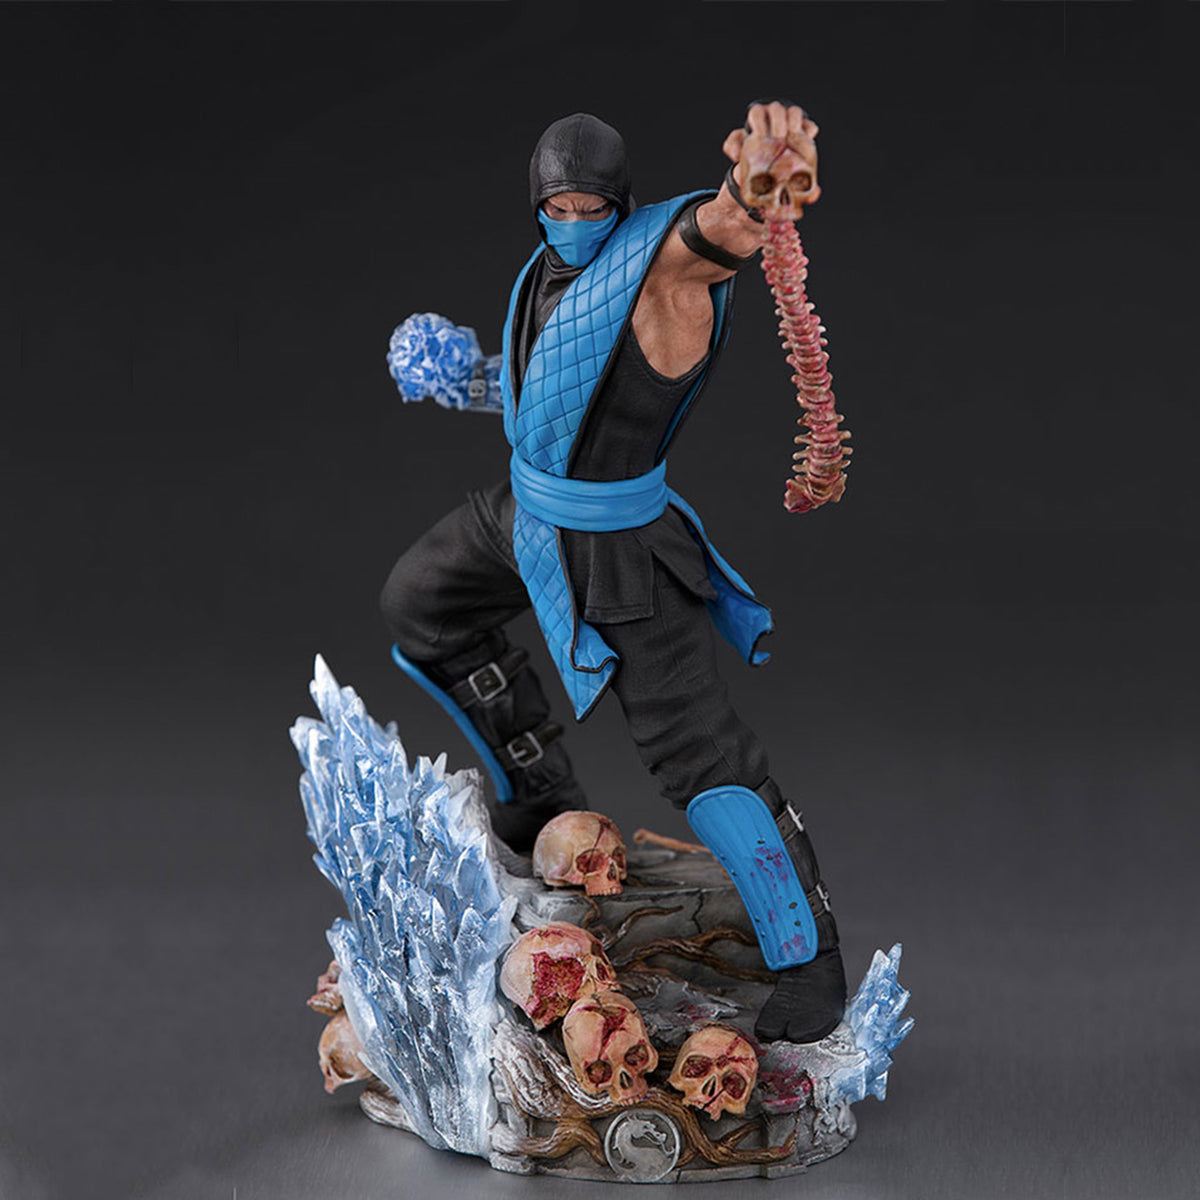 Shao Kahn Concept Art - Mortal Kombat 11 Art Gallery